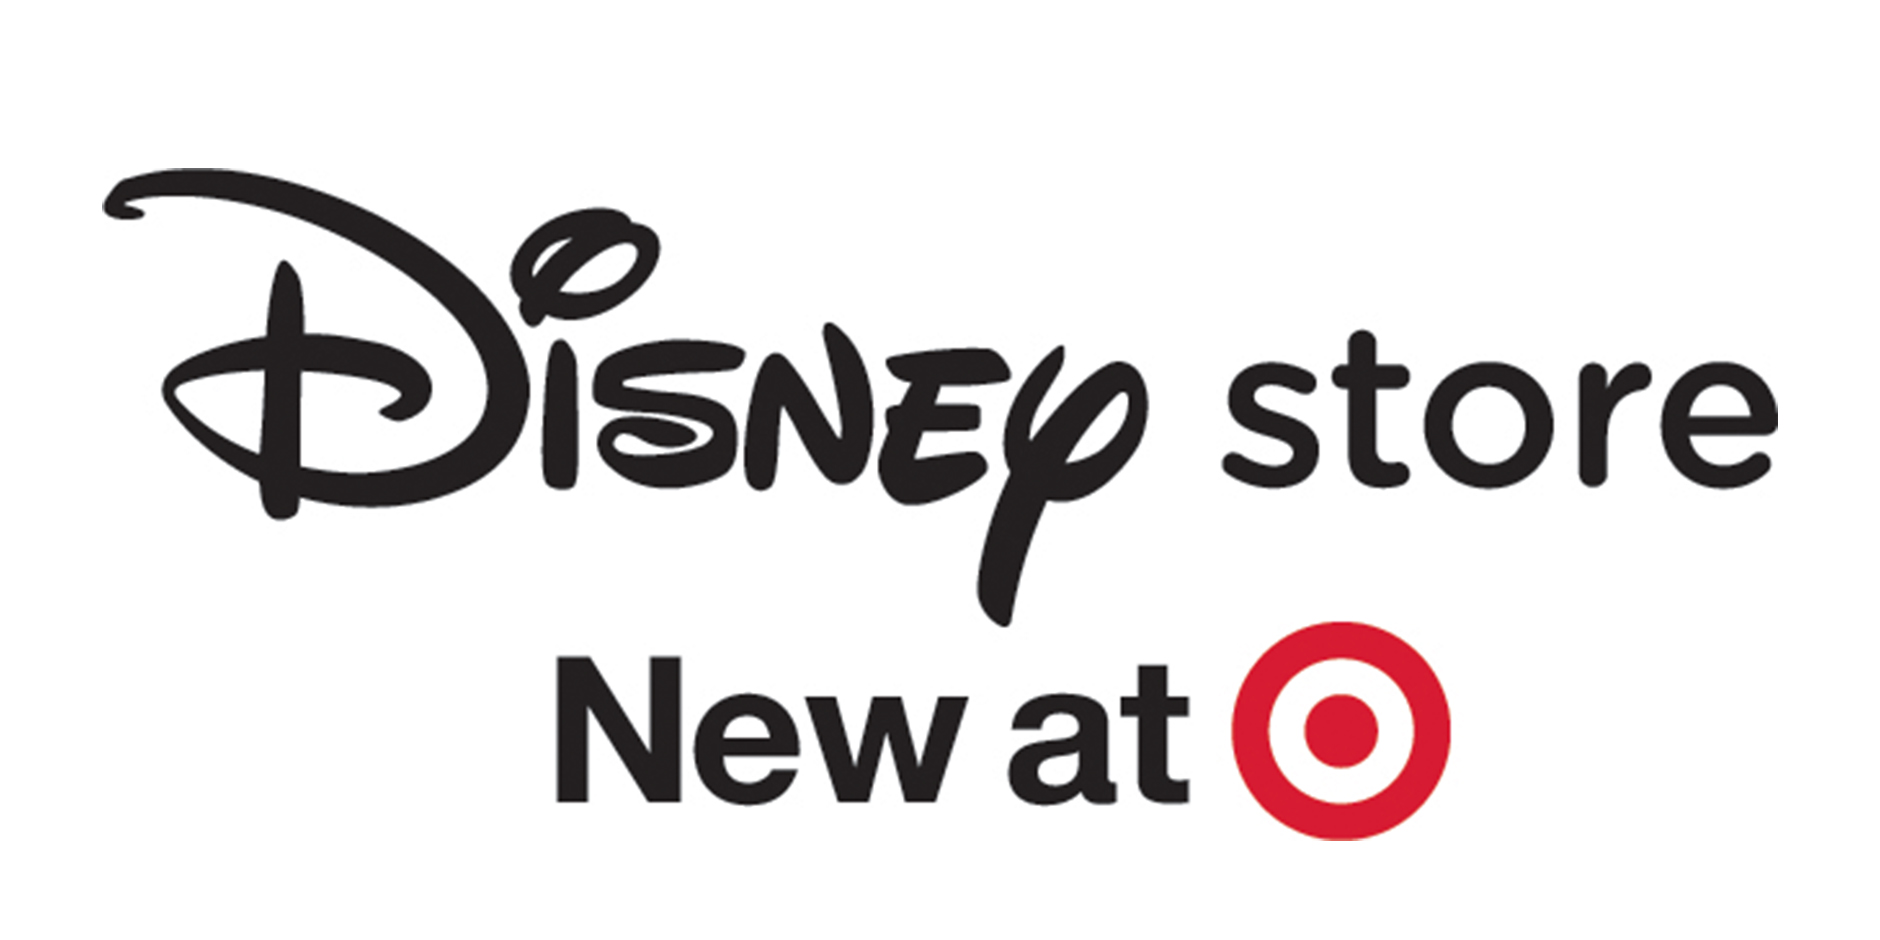 Disney Store Target